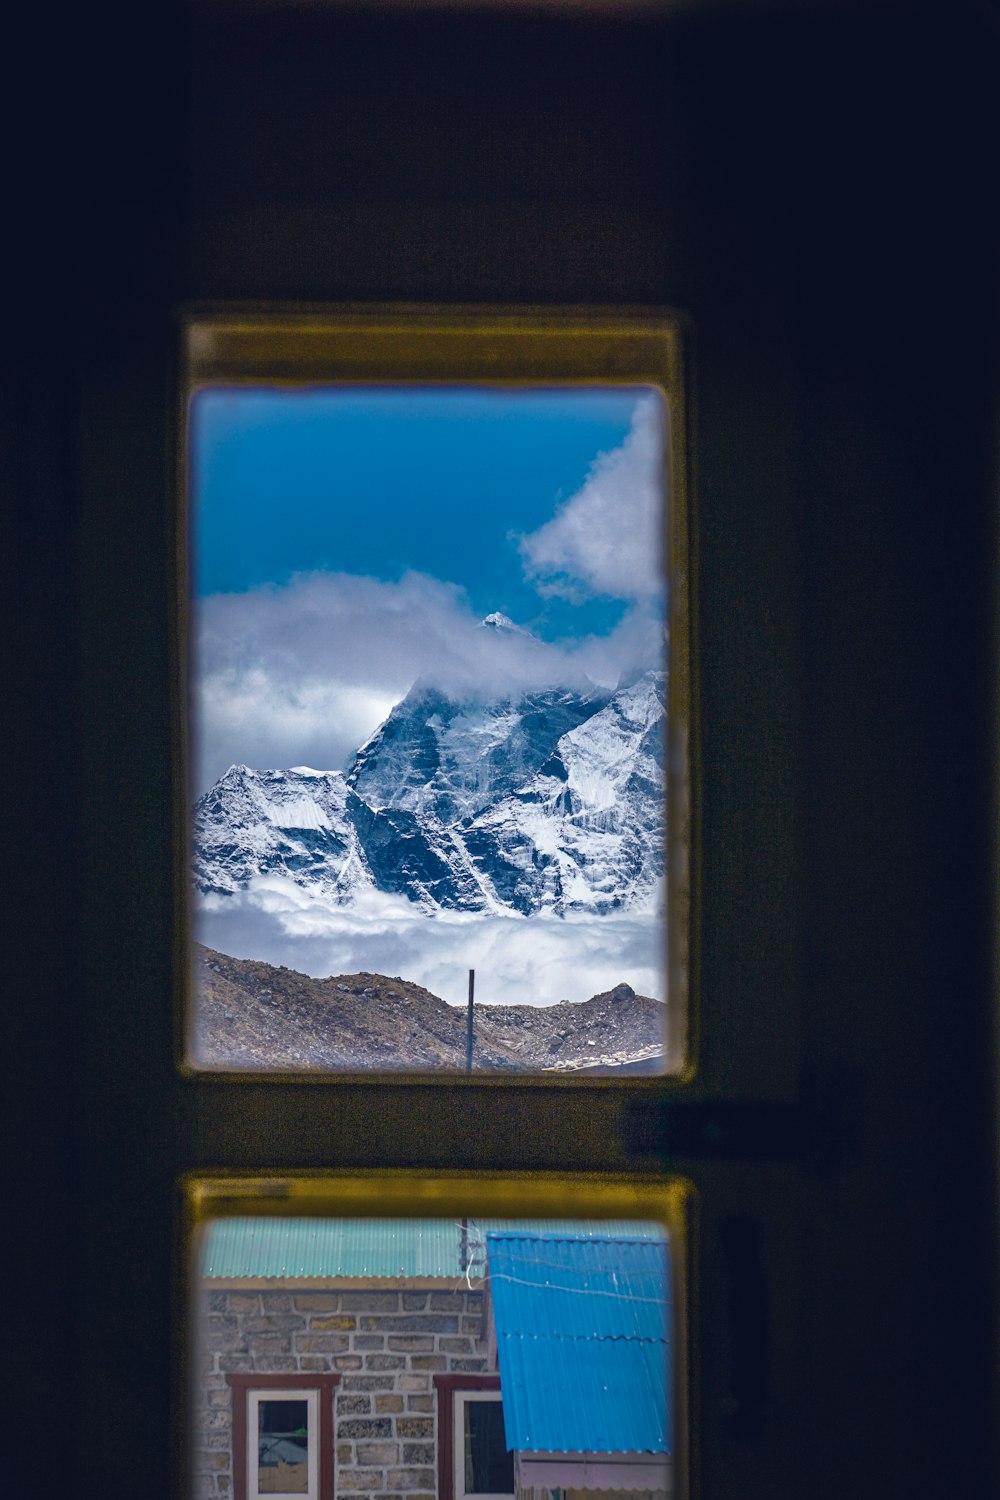 a view of a snowy mountain through a window